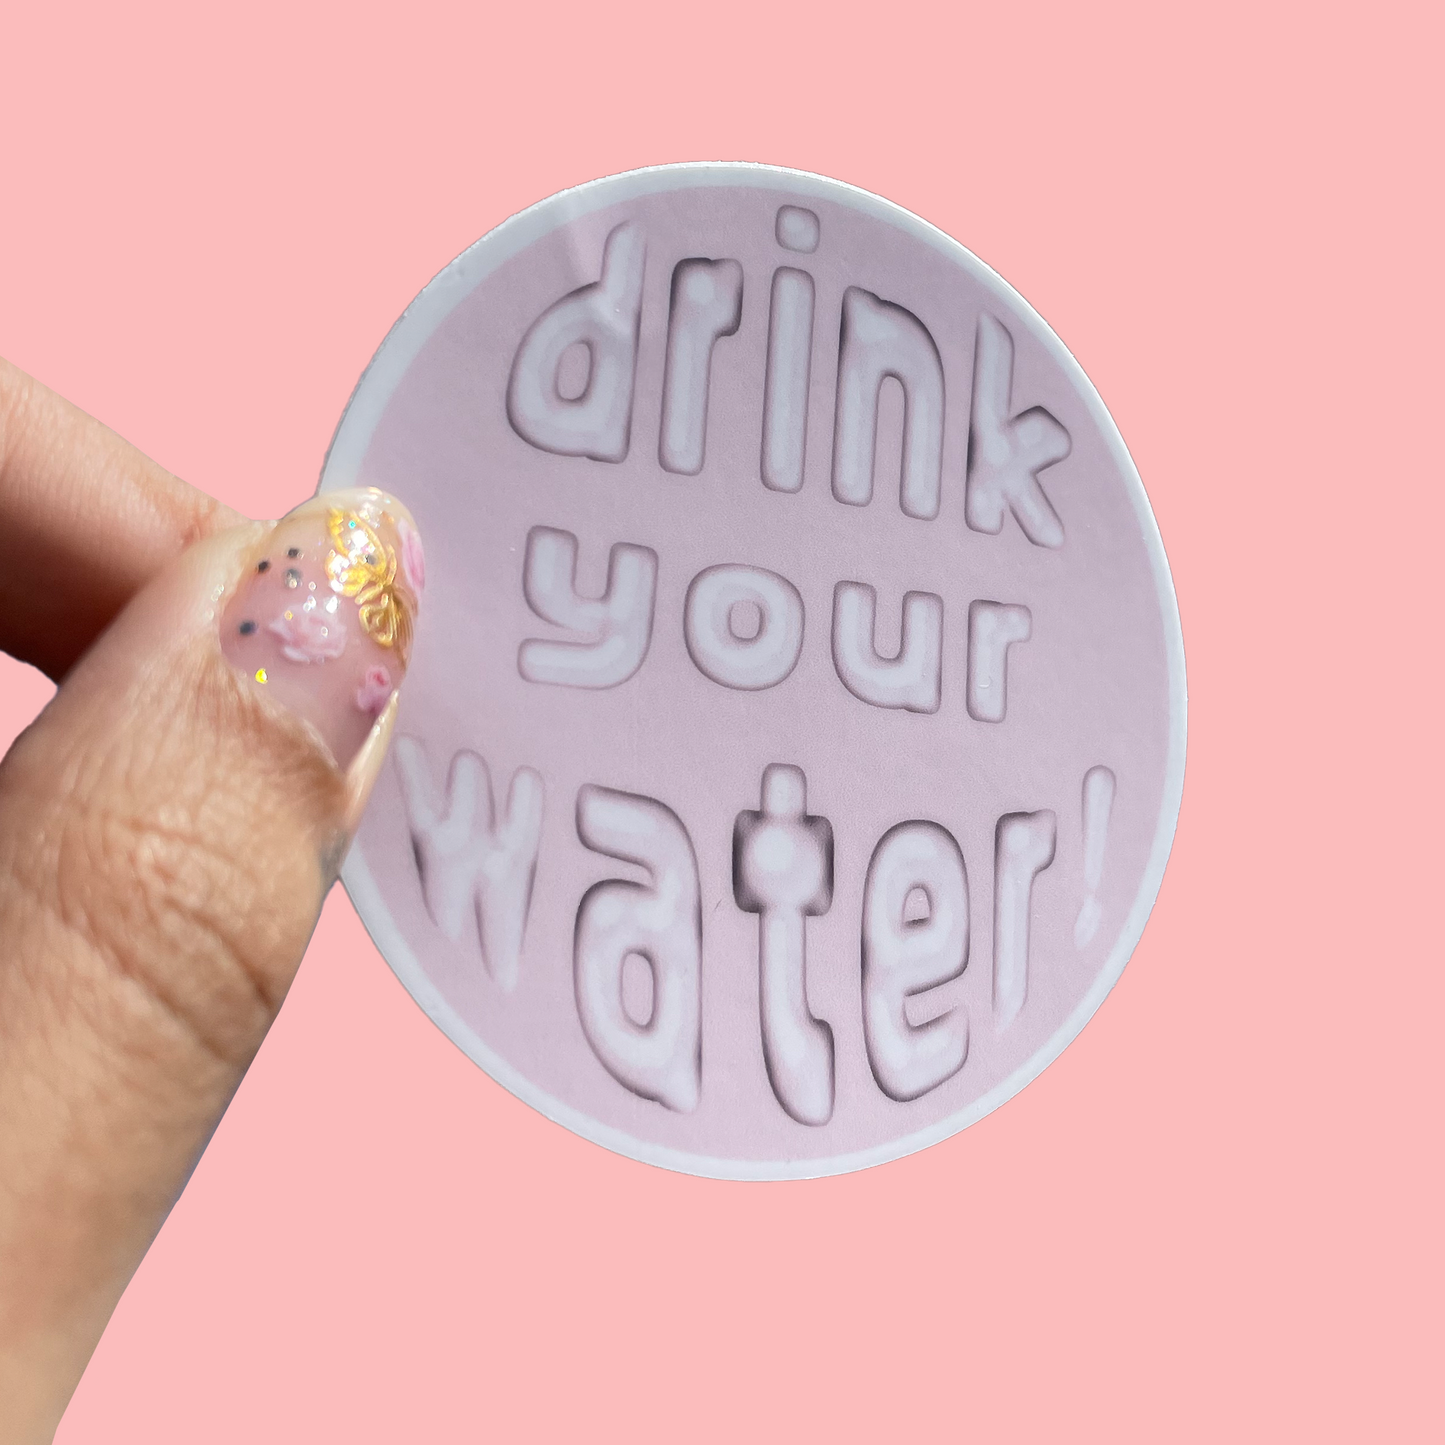 drink your water! sticker